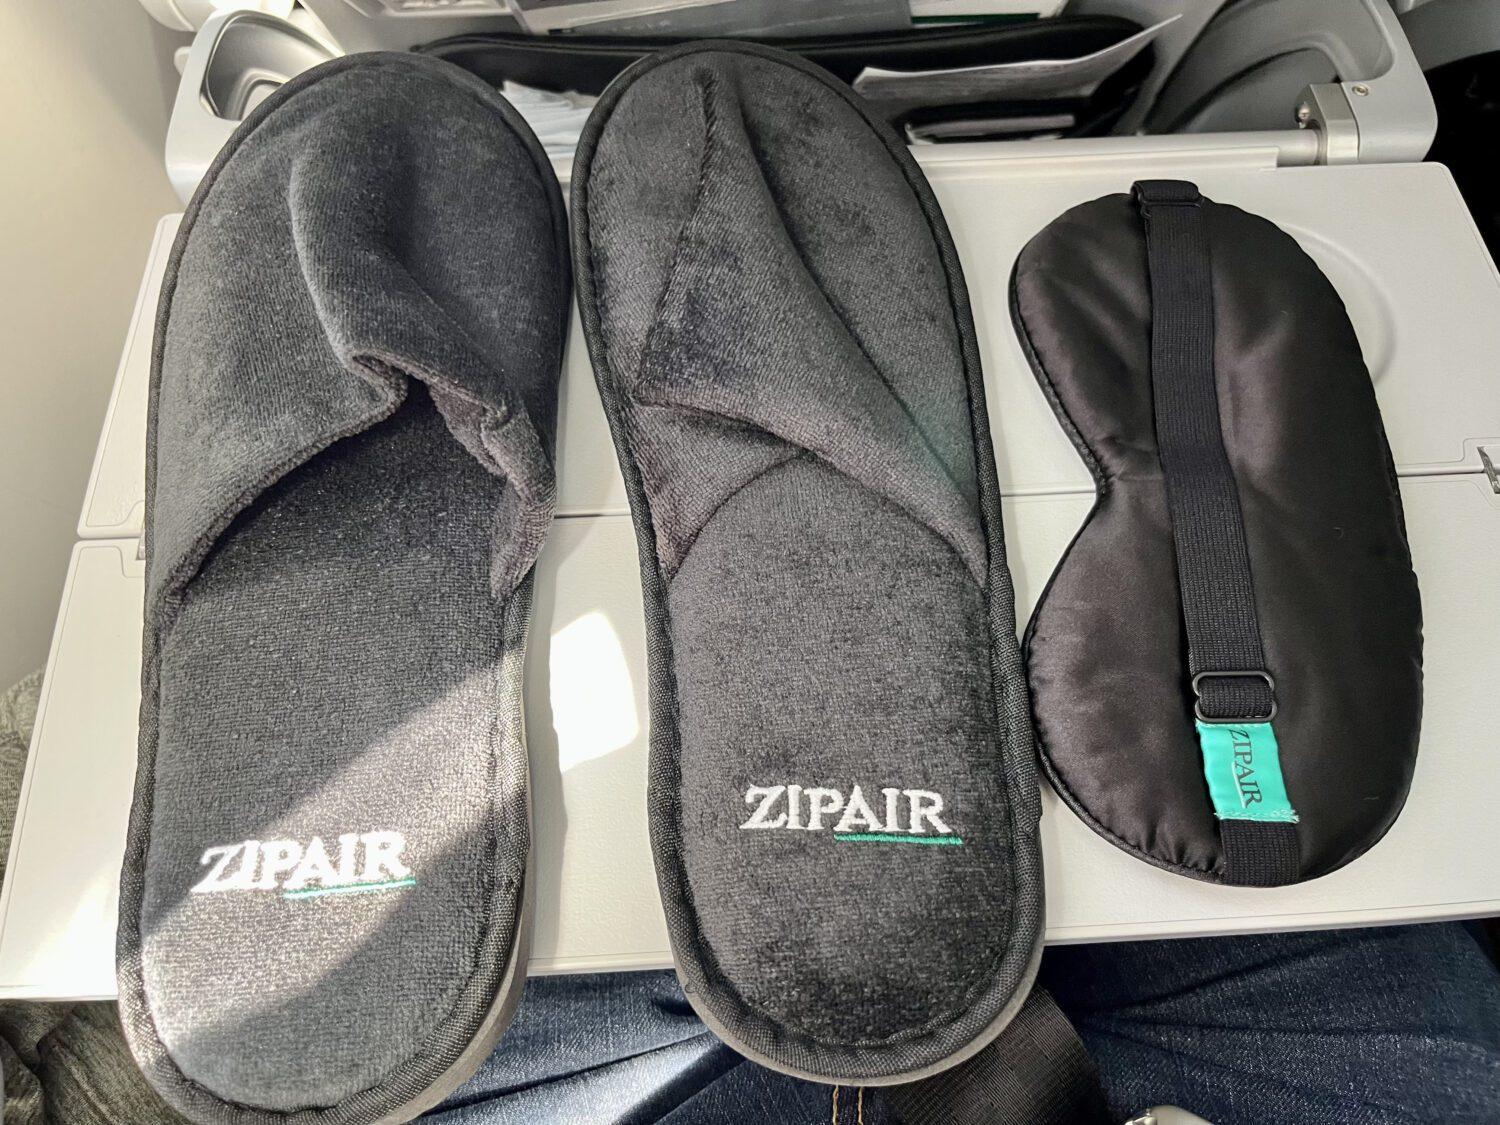 Zipair slippers and eye mask